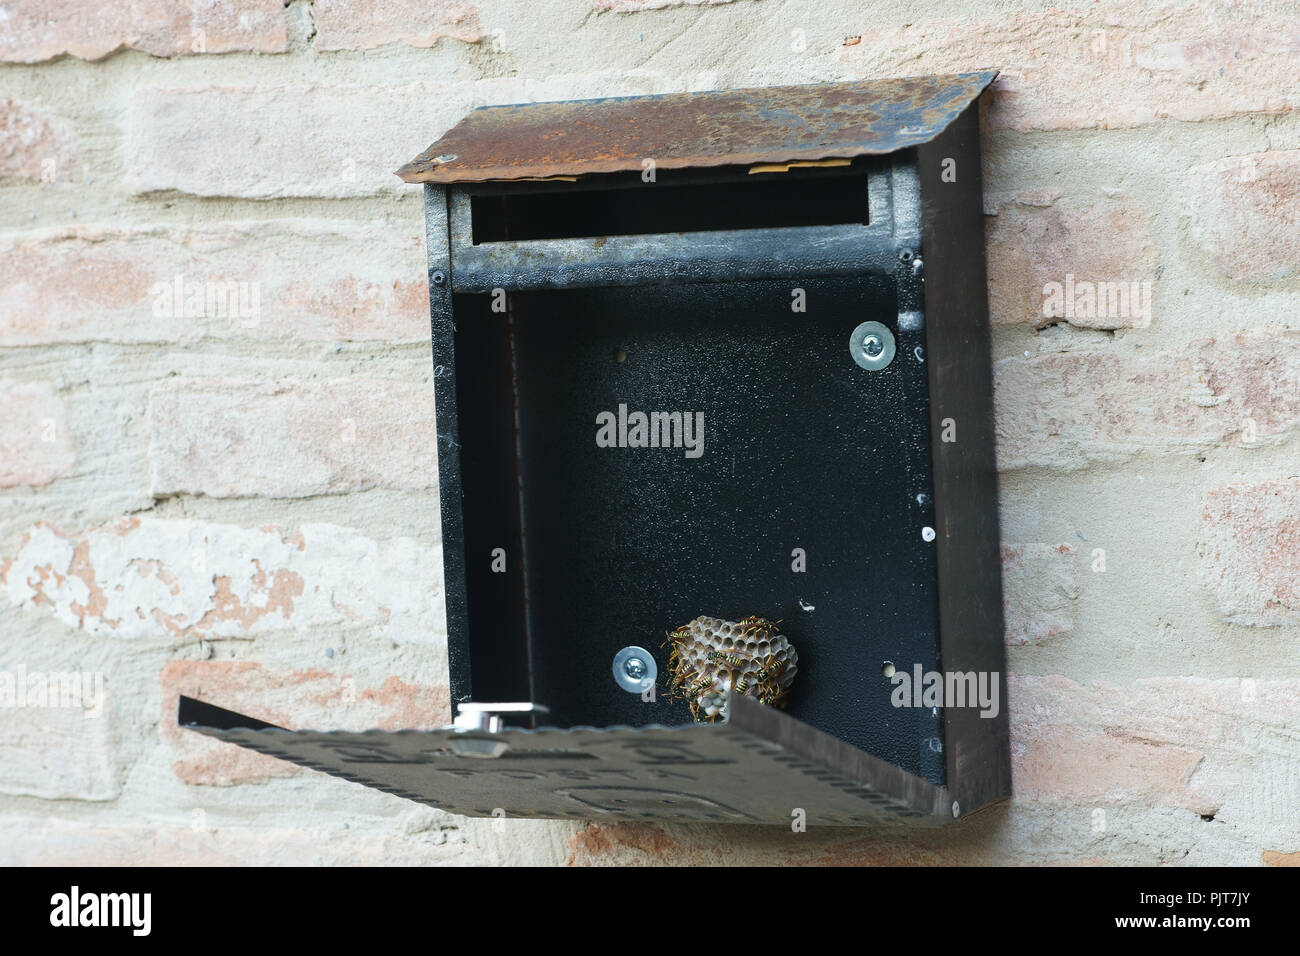 Polistes dominulus - Wasp nest inside mail box Stock Photo